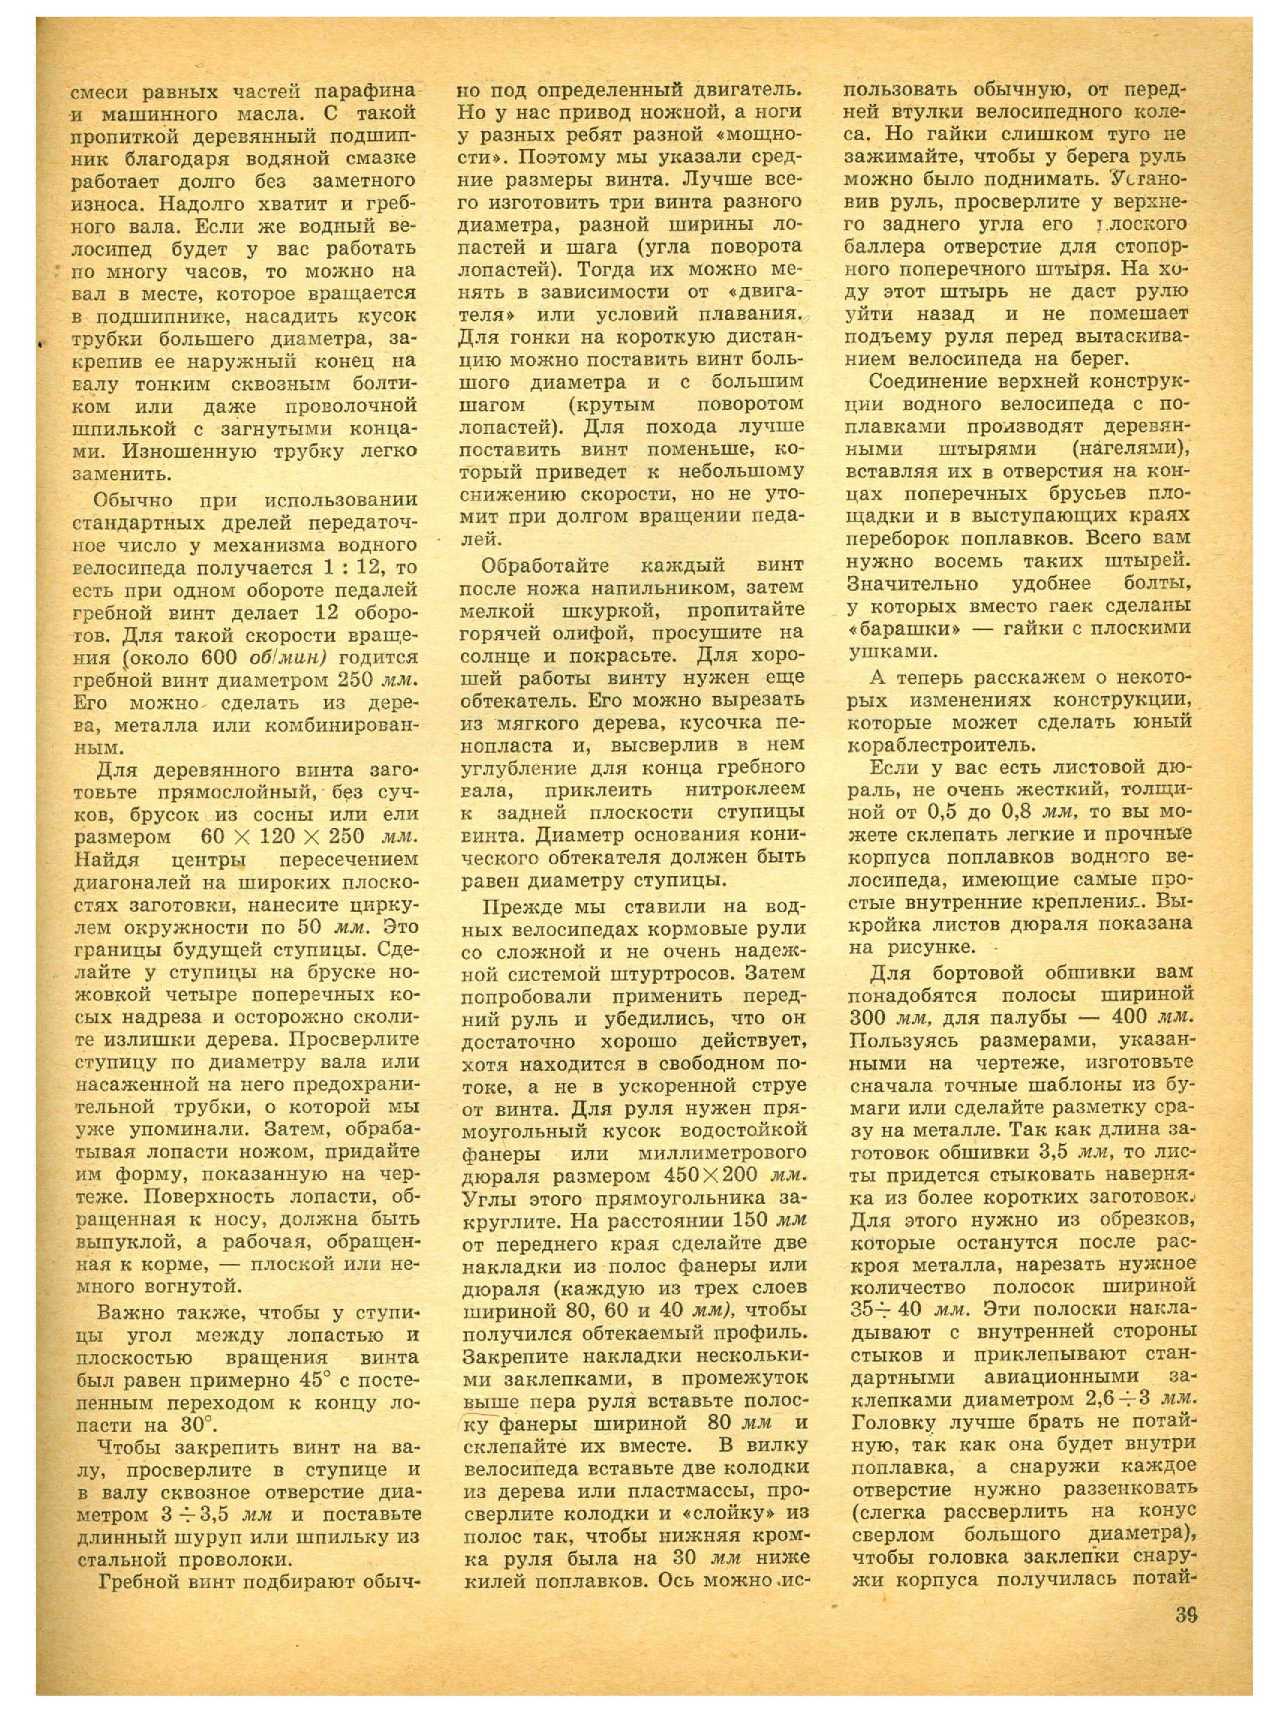 ЮМК 13, 1965, 39 c.